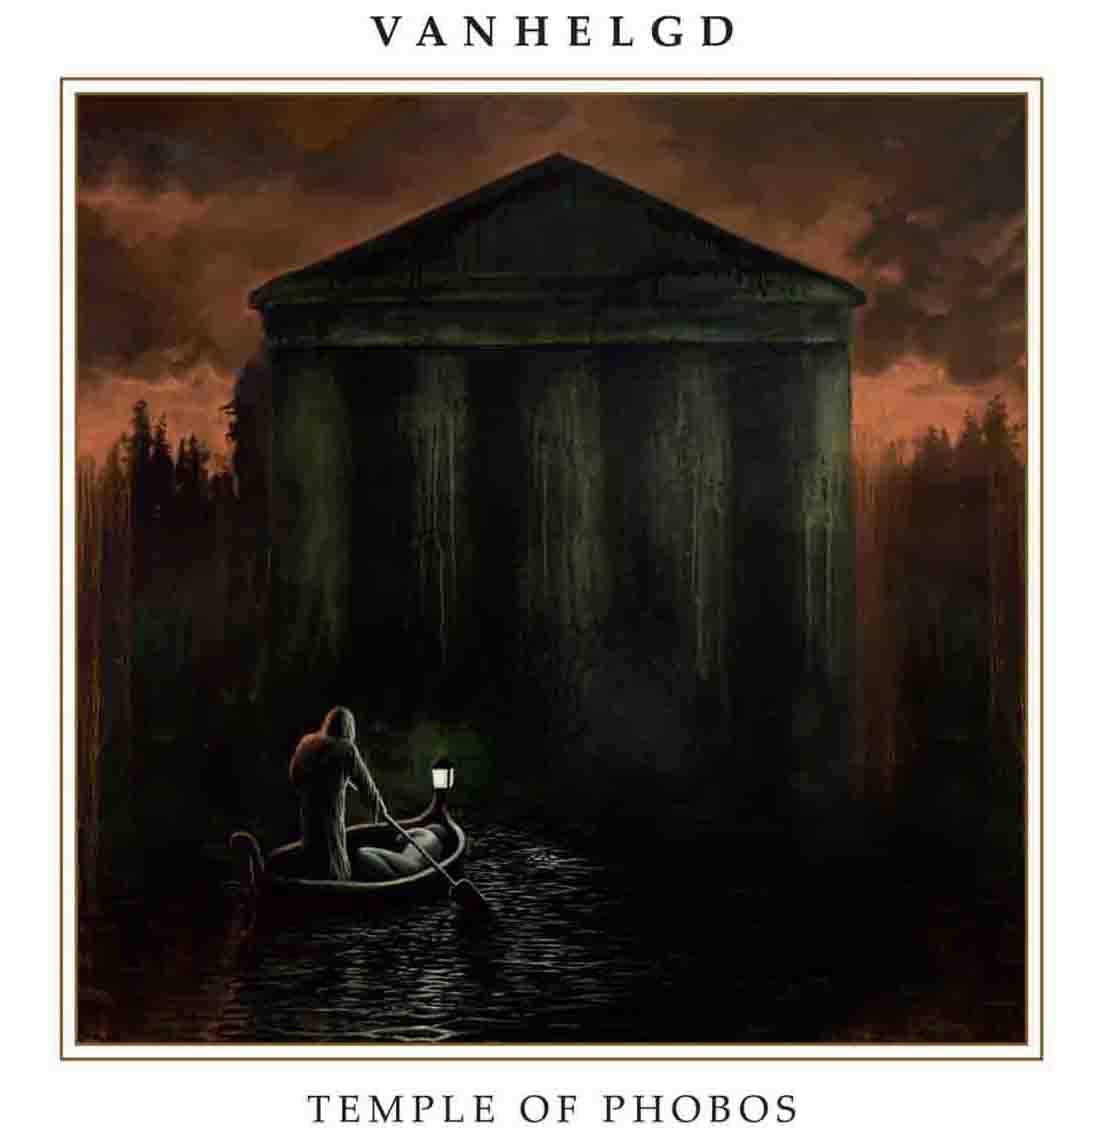 VANHELGD - TEMPLE OF PHOBOS CD